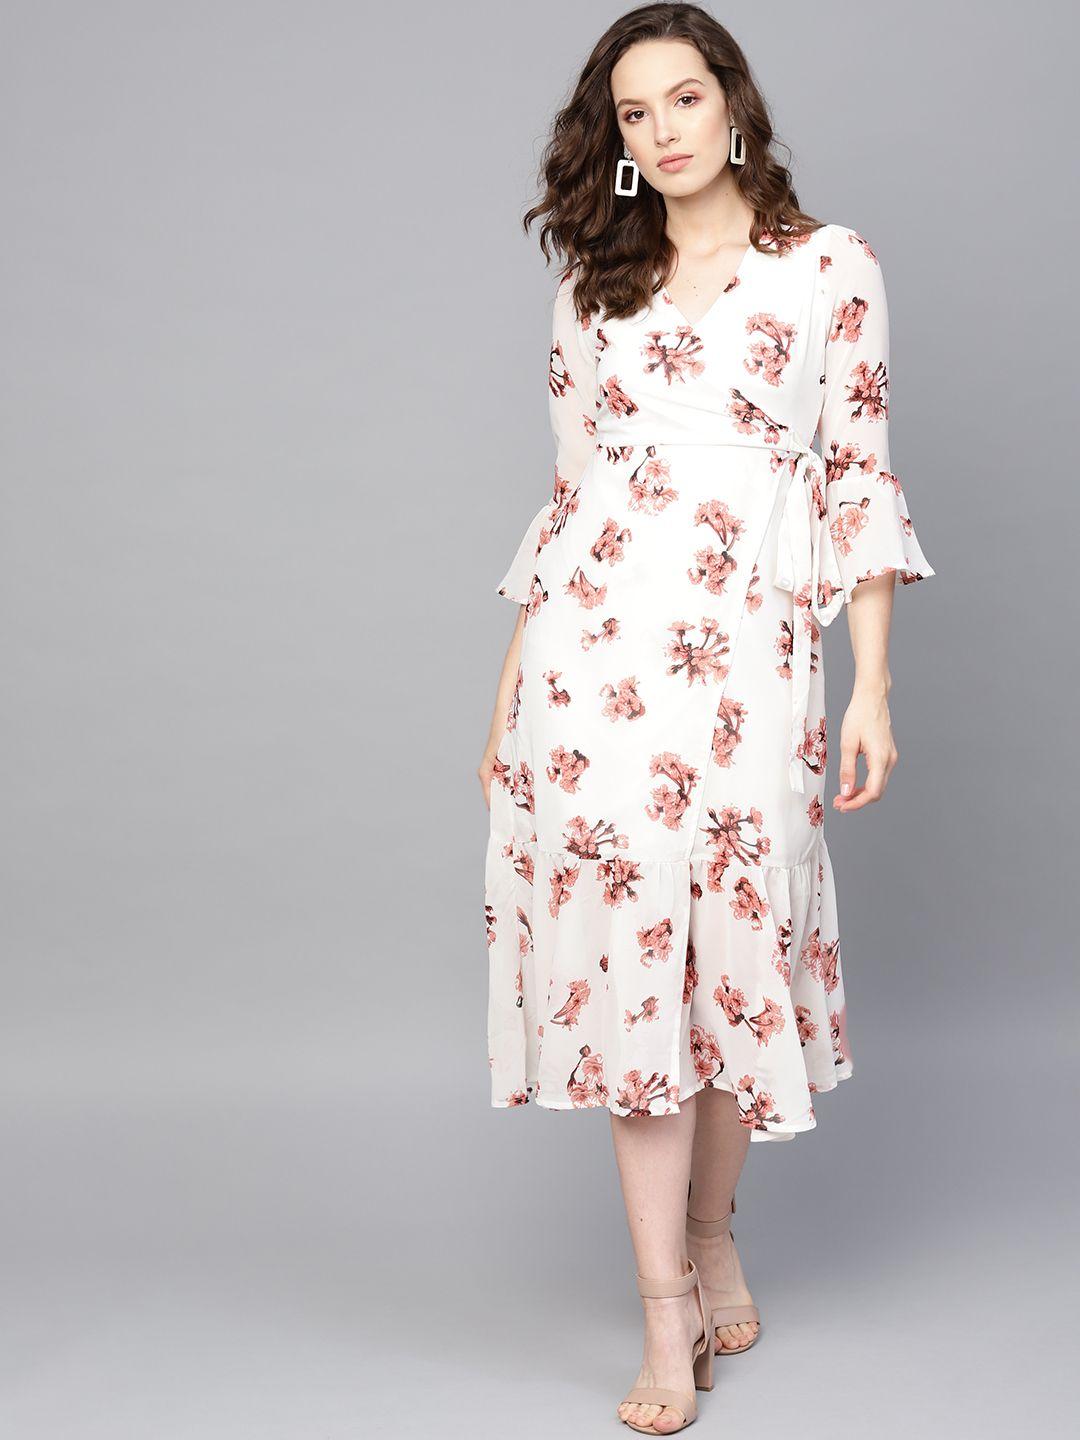 sassafras white & pink floral print wrap dress